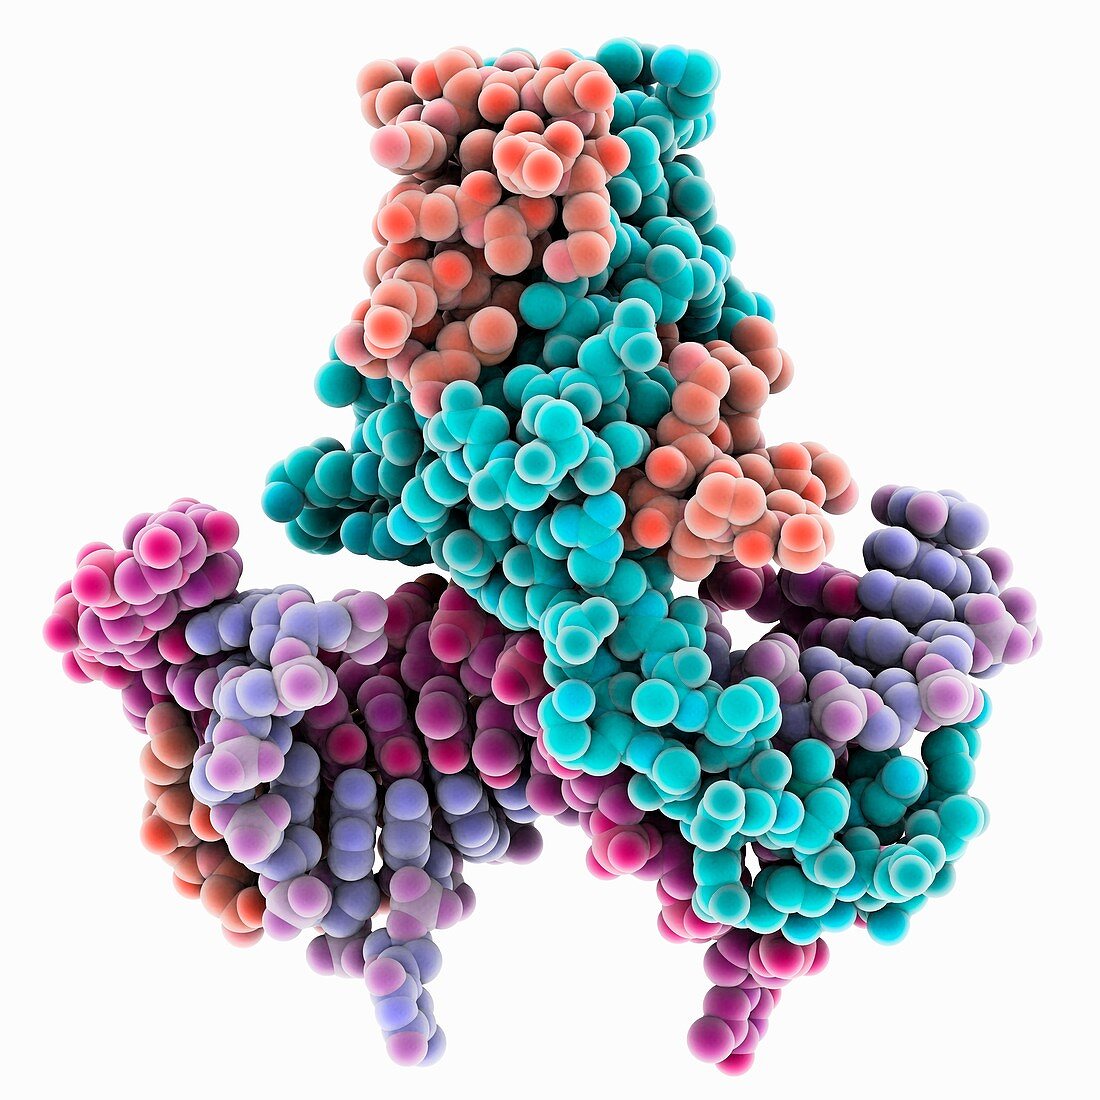 HU DNA binding protein molecule